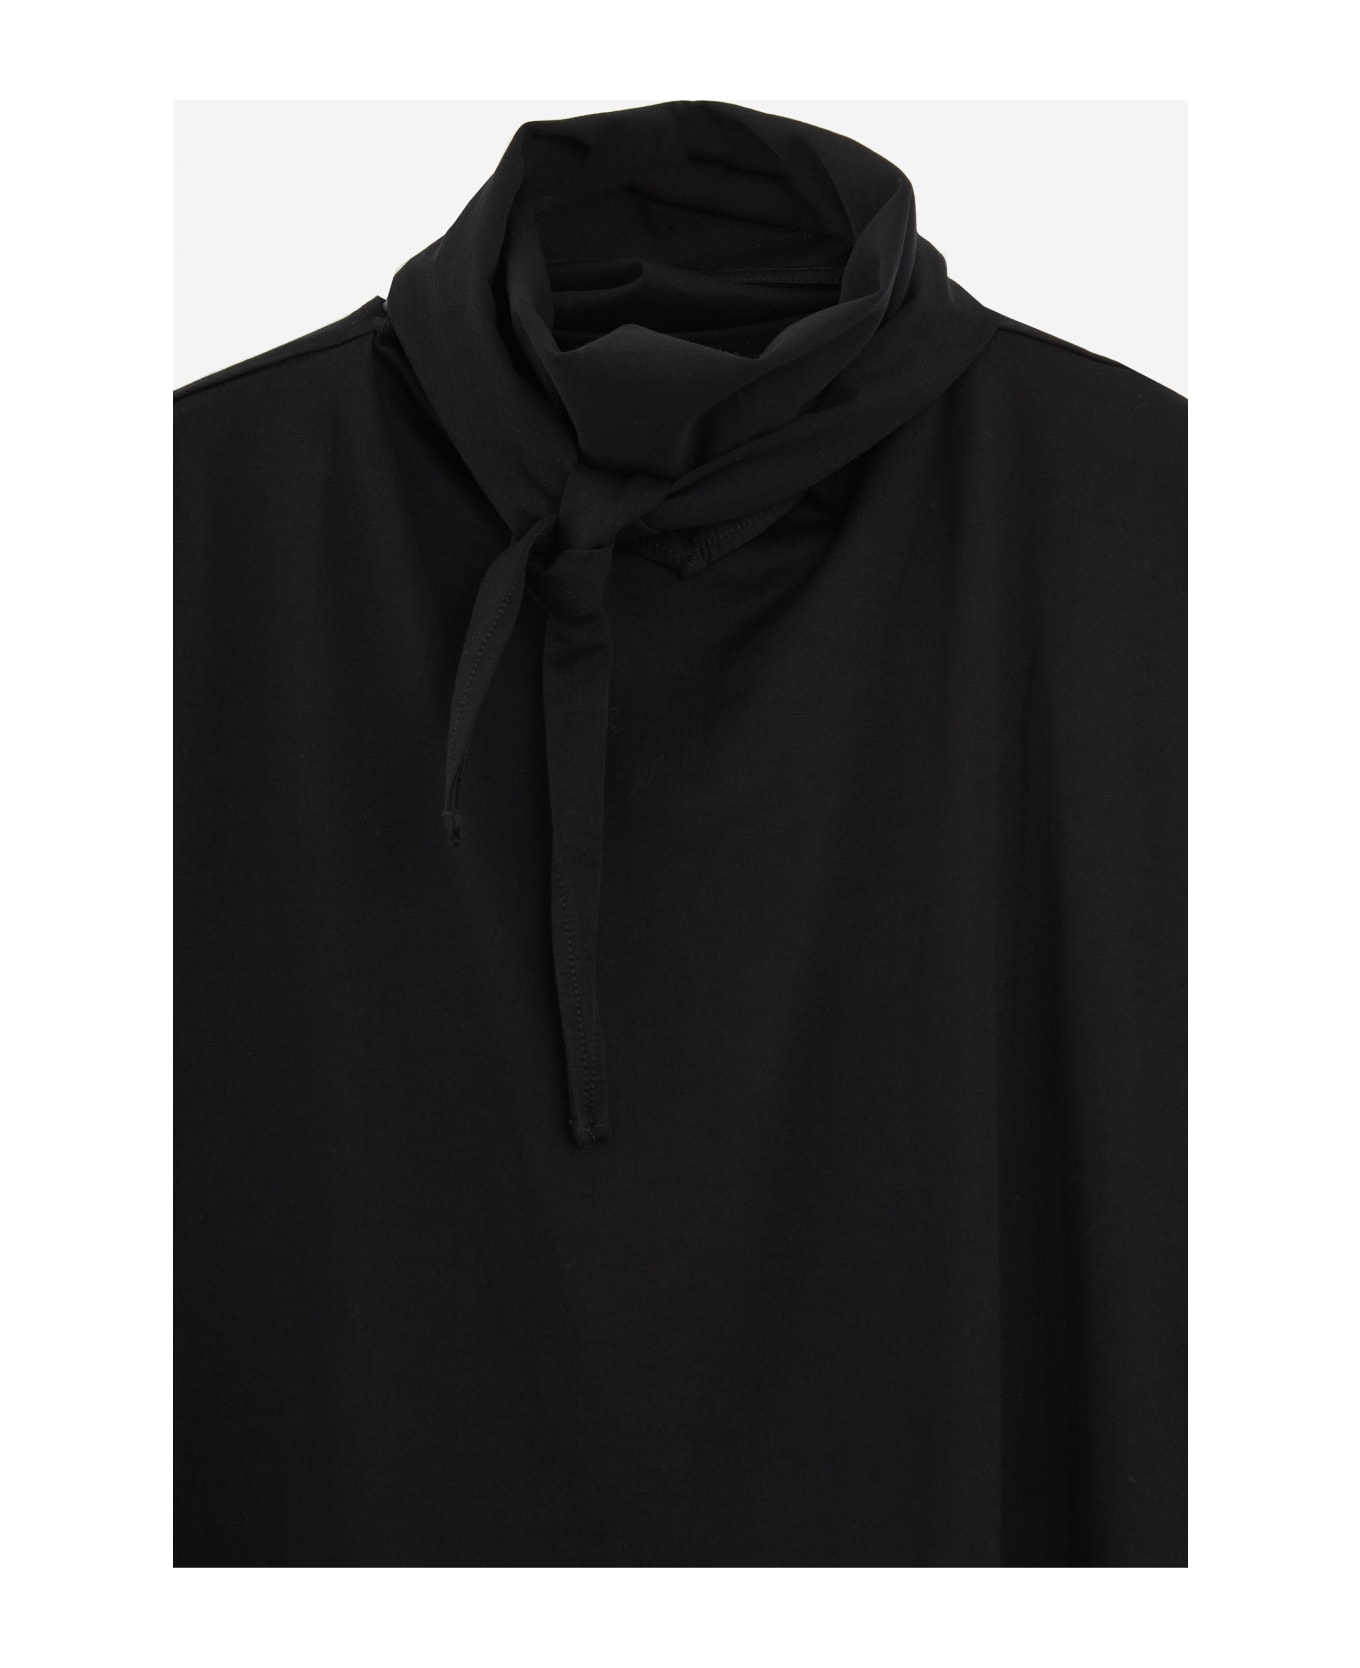 Lemaire T-shirt With Foulard T-shirt - black